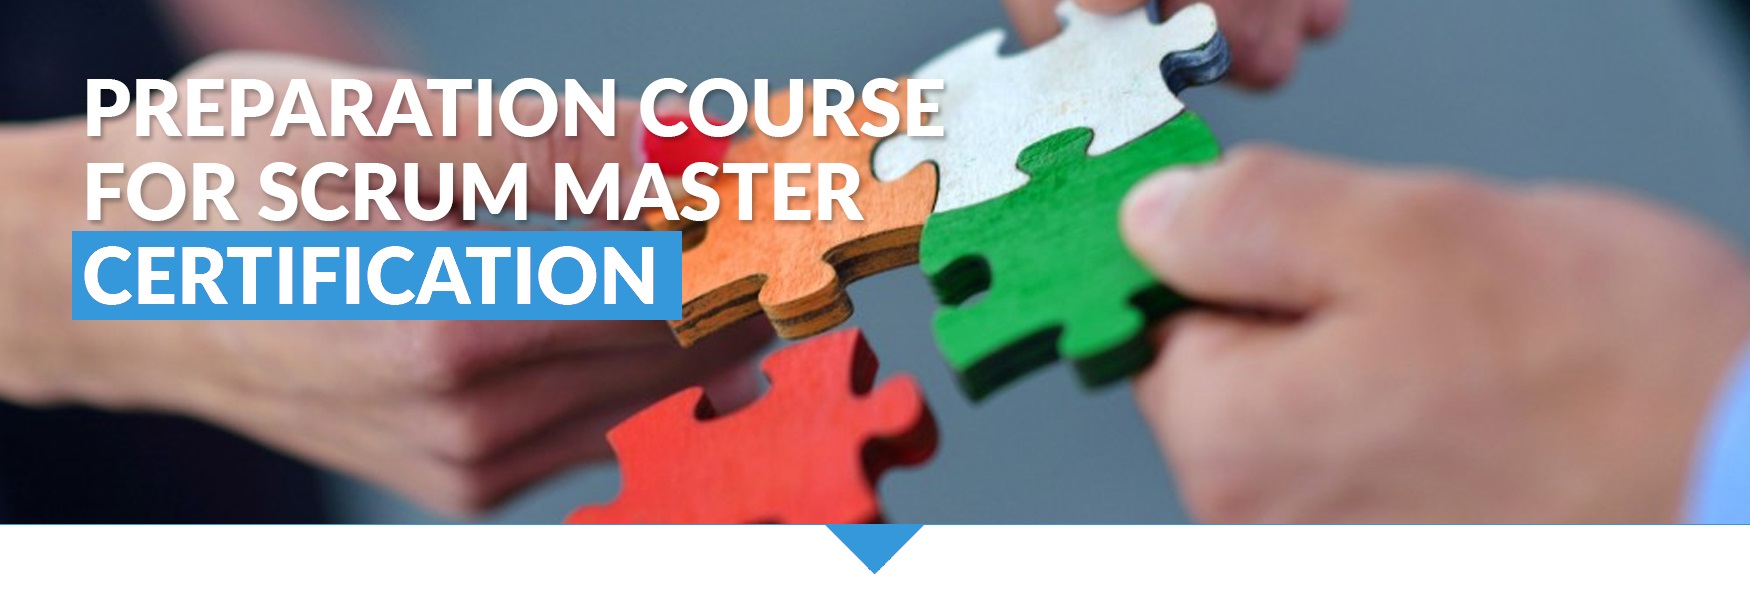 Preparation Course for Scrum Master Certification (November, 2021)